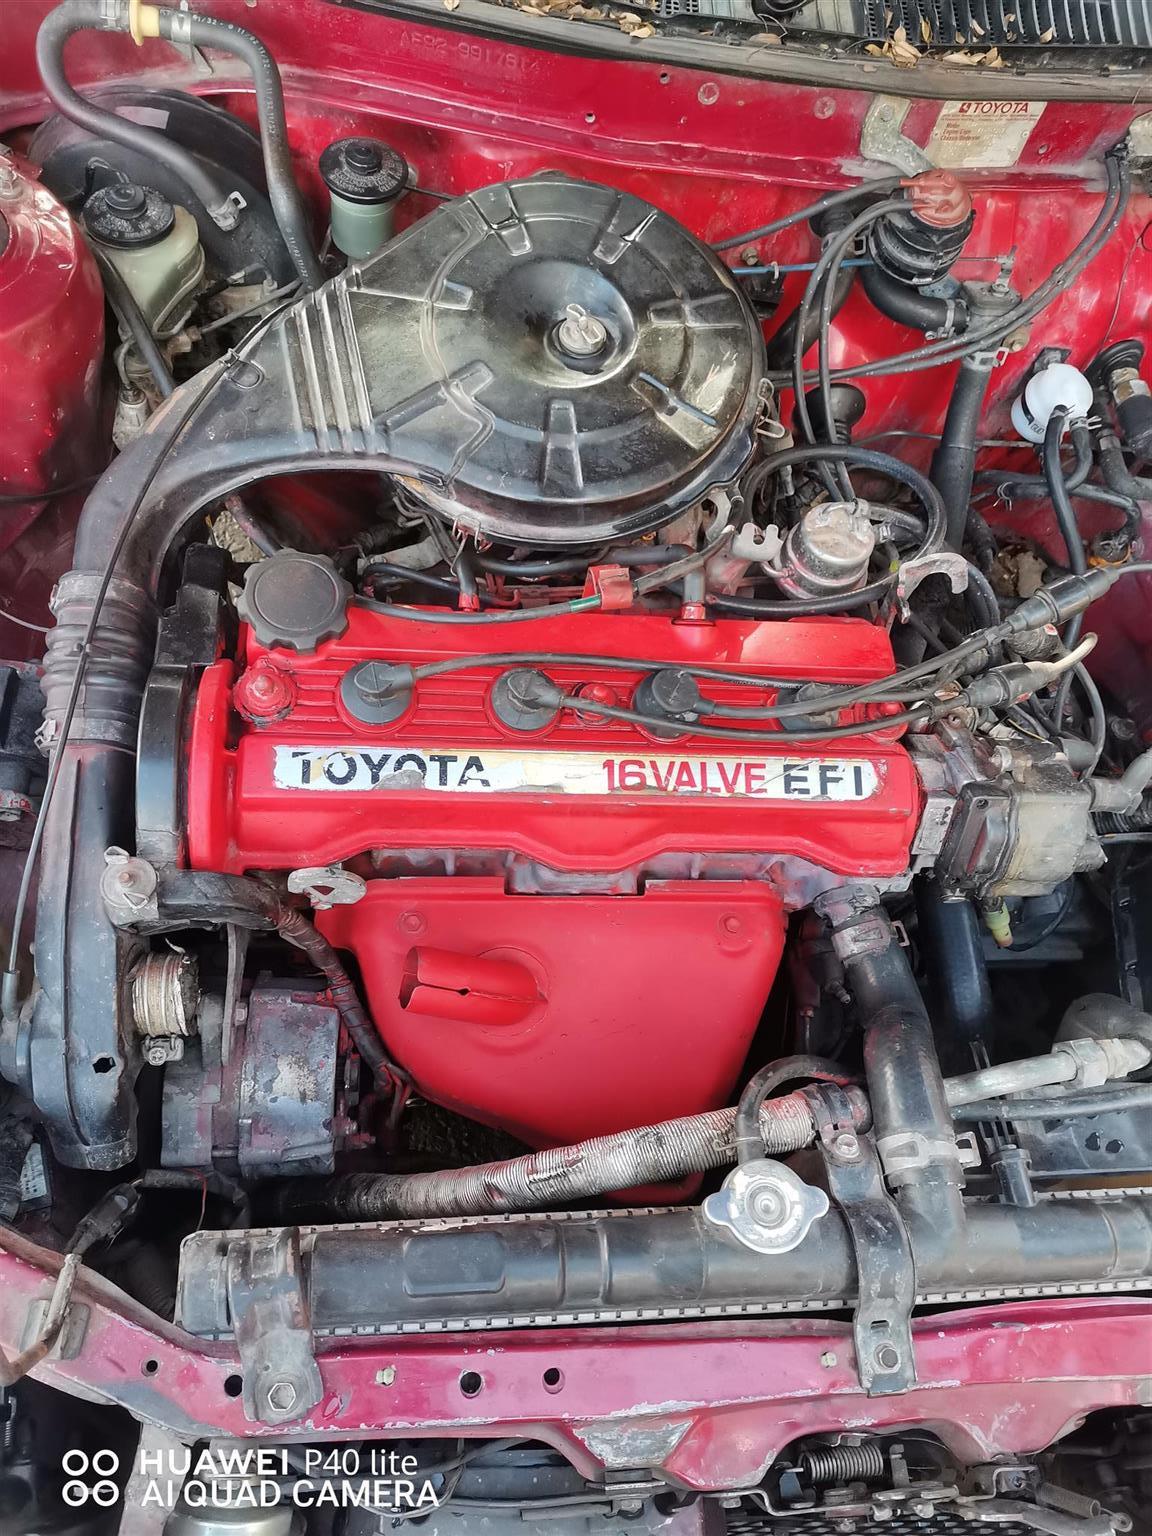 Selling my Toyota conquest 1.6 carburetor